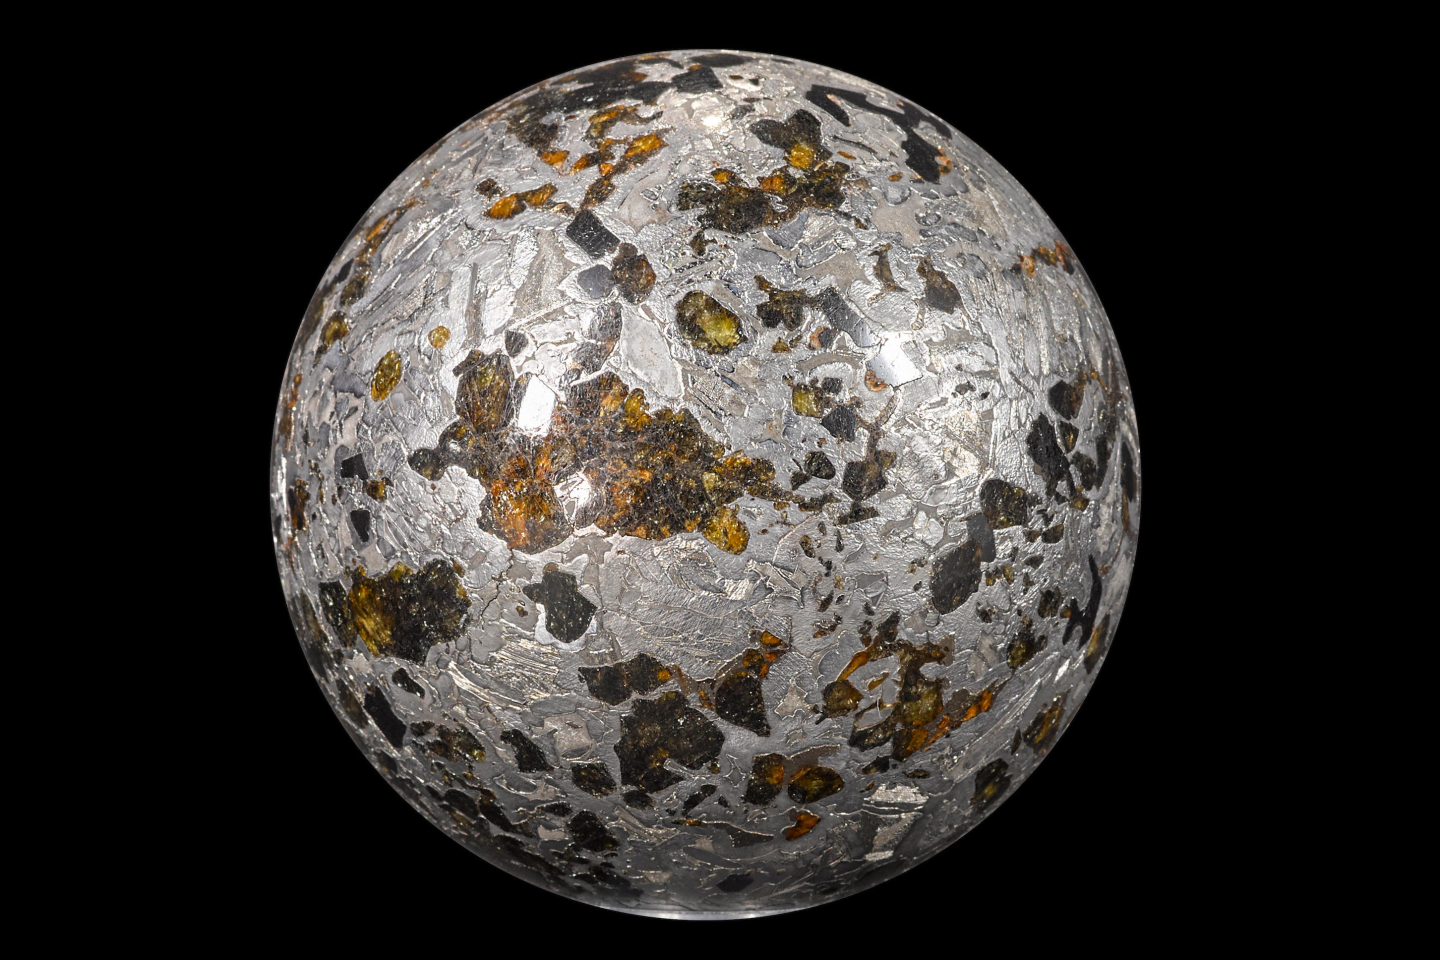 Weighing 7.53 lbs (3.417 kg), this 4 inch (10 cm) diameter sphere was cut from a Seymchan meteorite found in Russia in 1967.